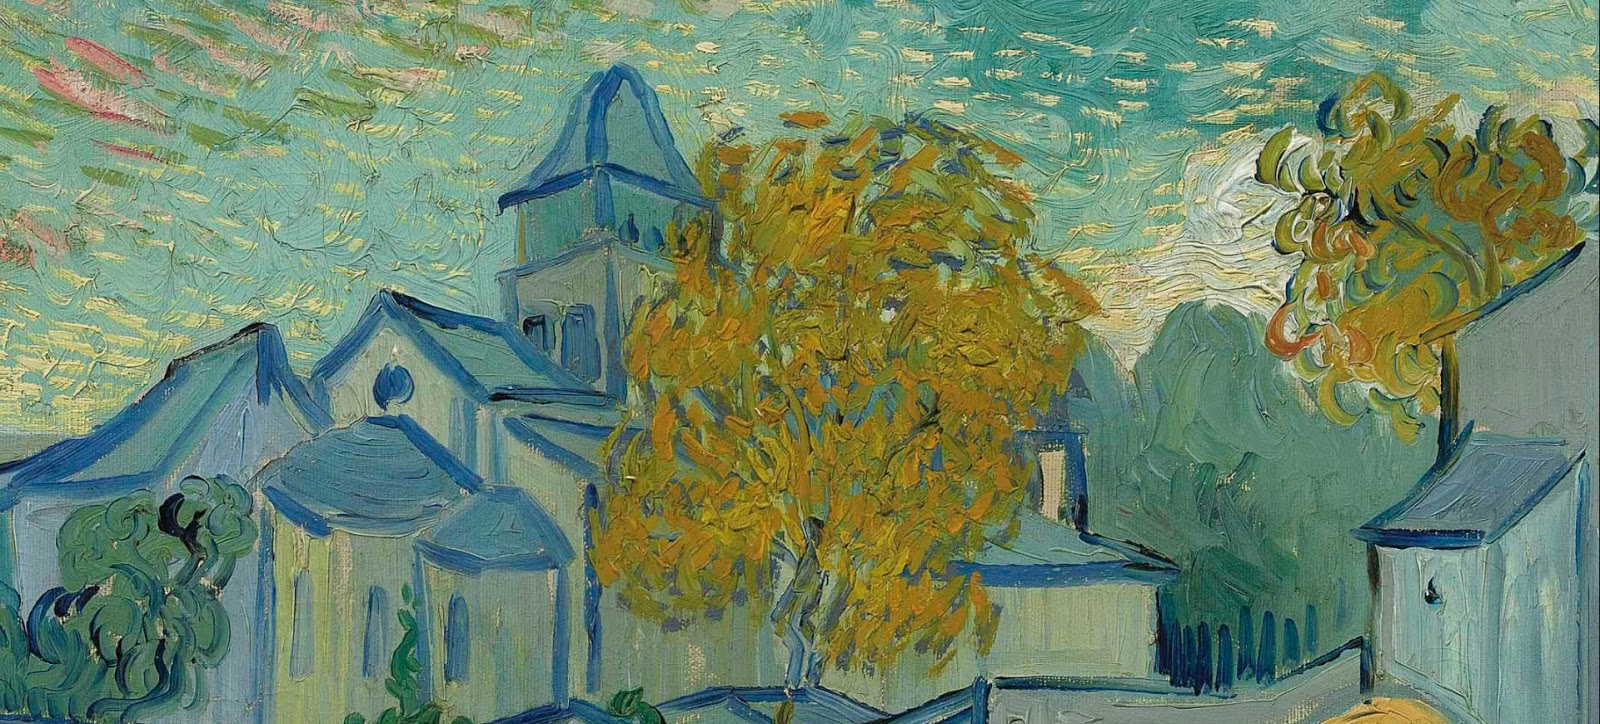 Vincent+Van+Gogh-1853-1890 (496).jpg